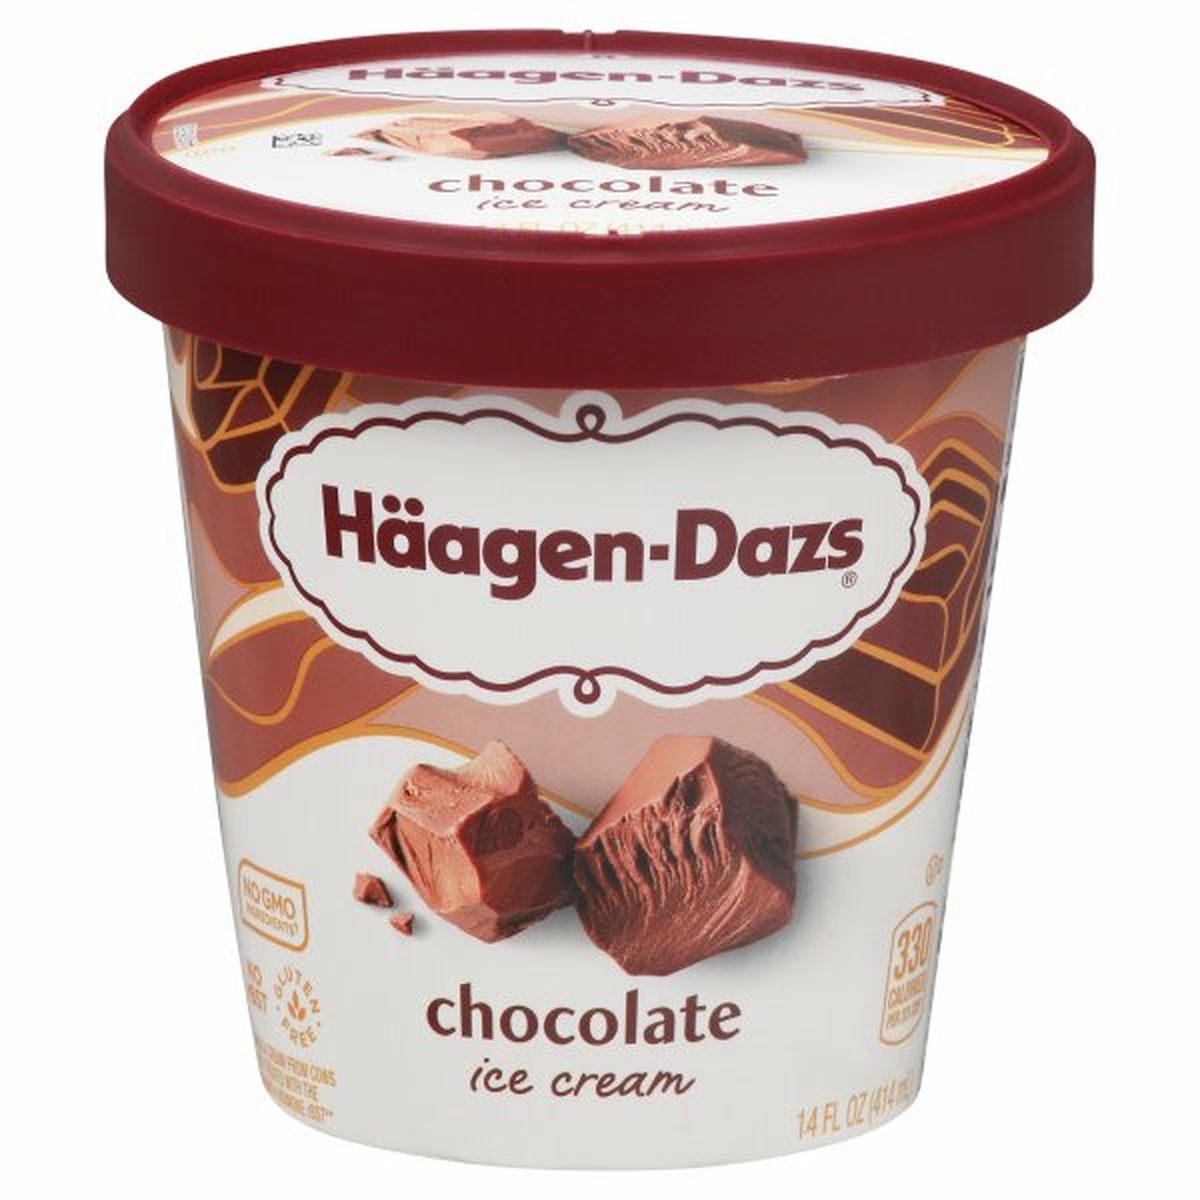 Calories in Haagen-Dazs Ice Cream, Chocolate